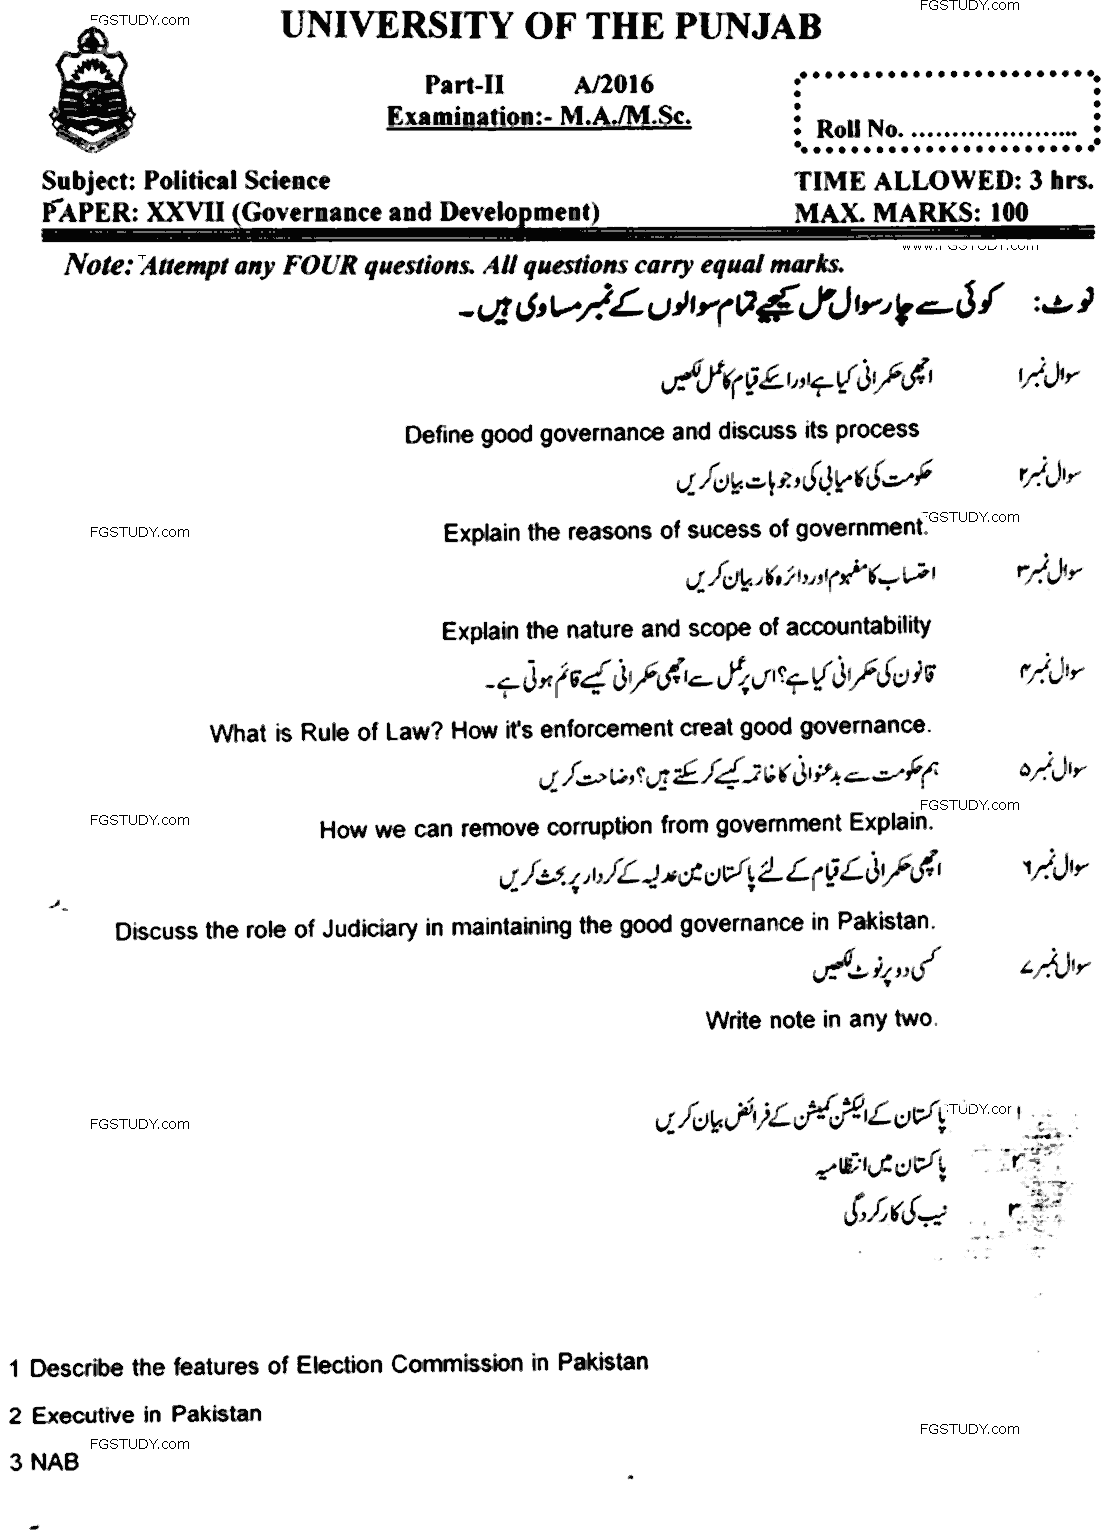 MA Part 2 Political Science Governance And Development Past Paper 2016 Punjab University